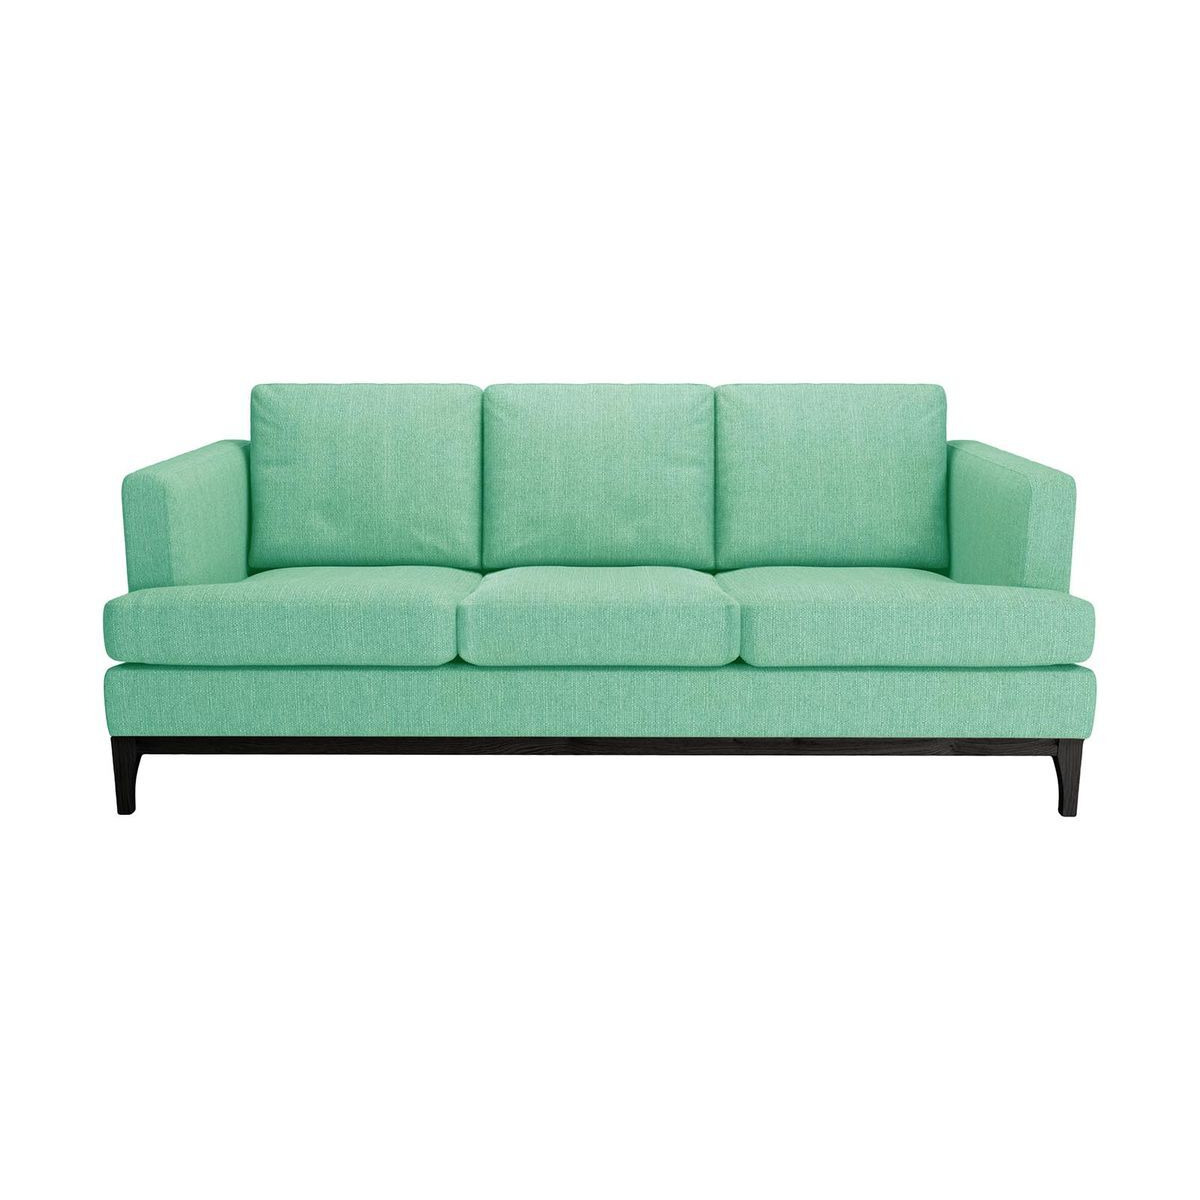 Scarlett Structured 3 Seater Sofa, turquoise, Leg colour: black - image 1